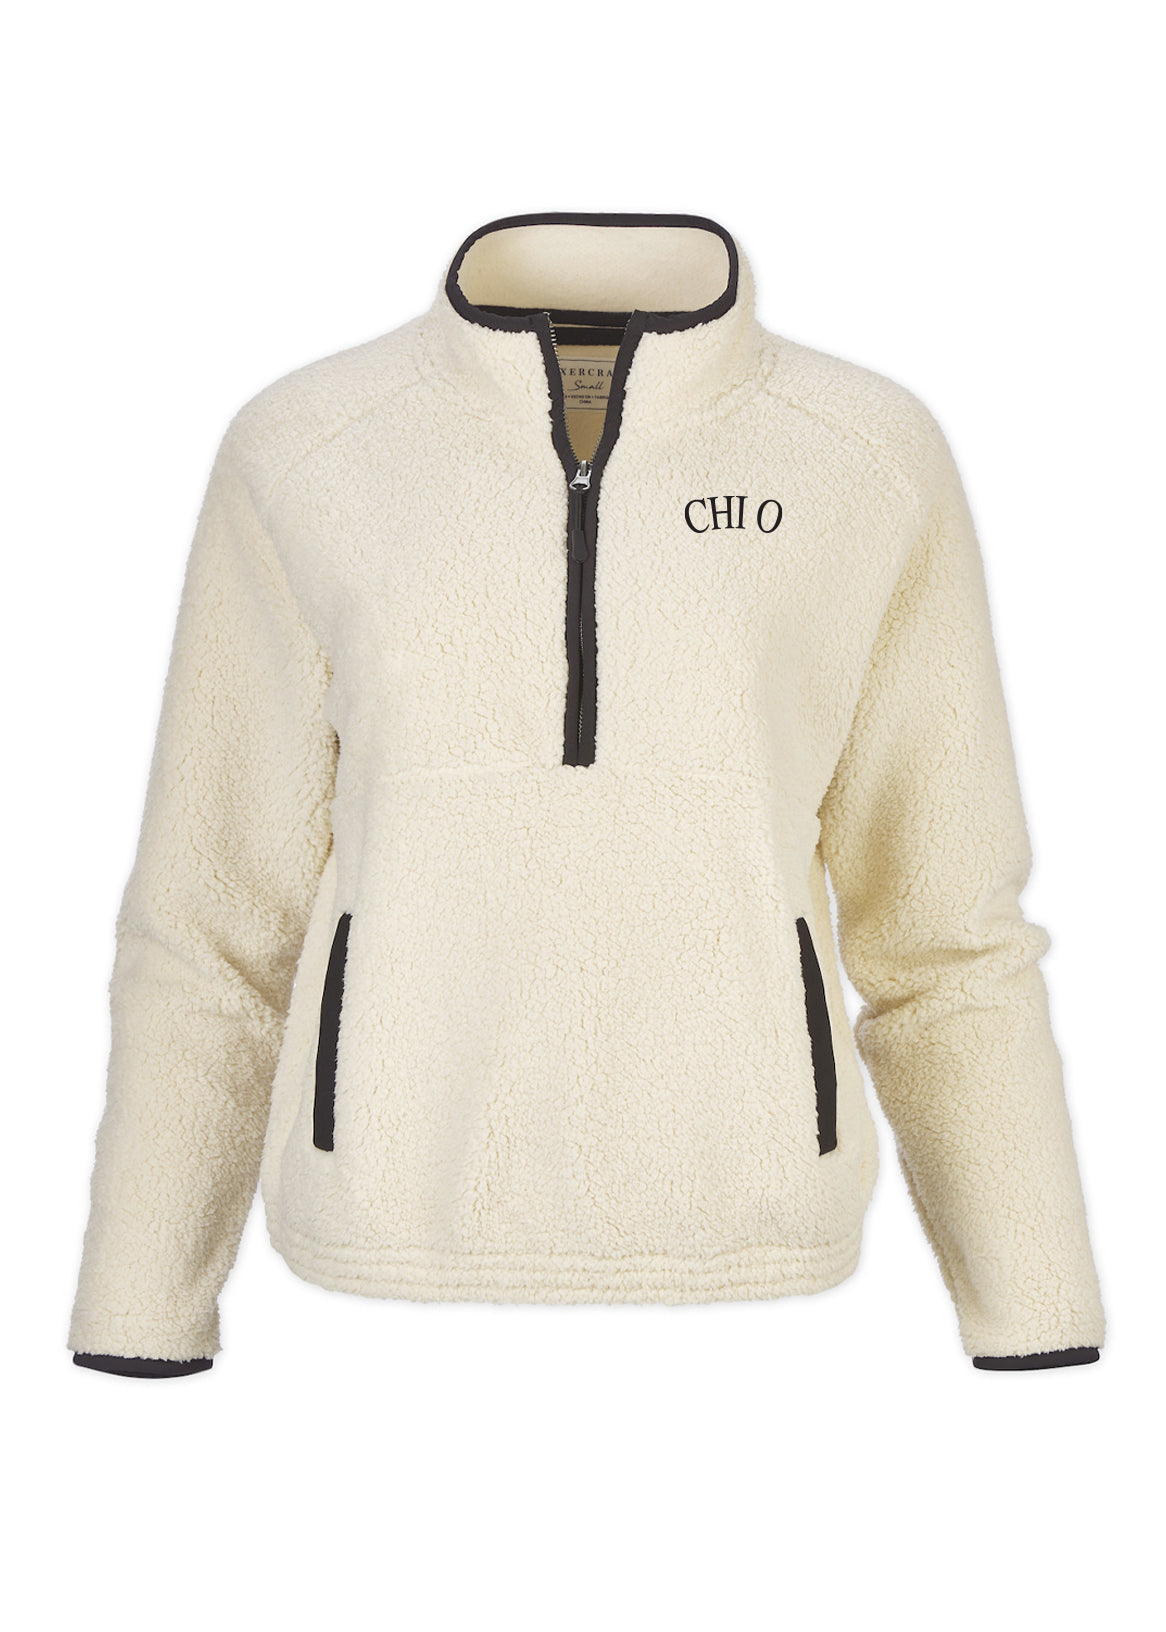 Chi O Embroidered Cream Fleece Half Zip